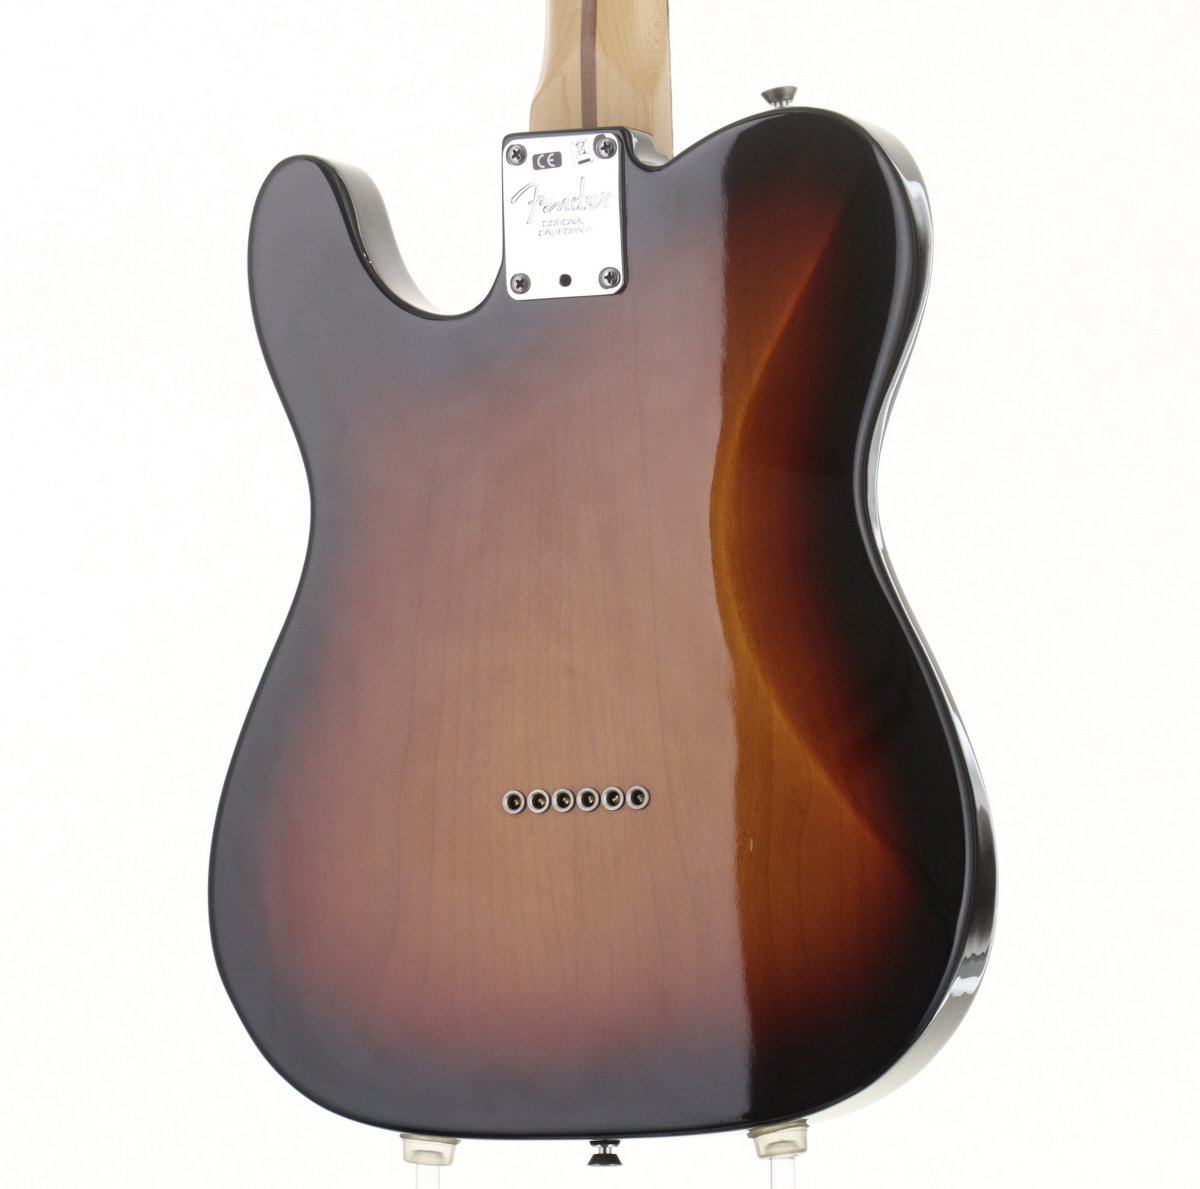 [SN US15034787] USED Fender USA / American Standard Telecaster 3 Tone Sunburst [10]